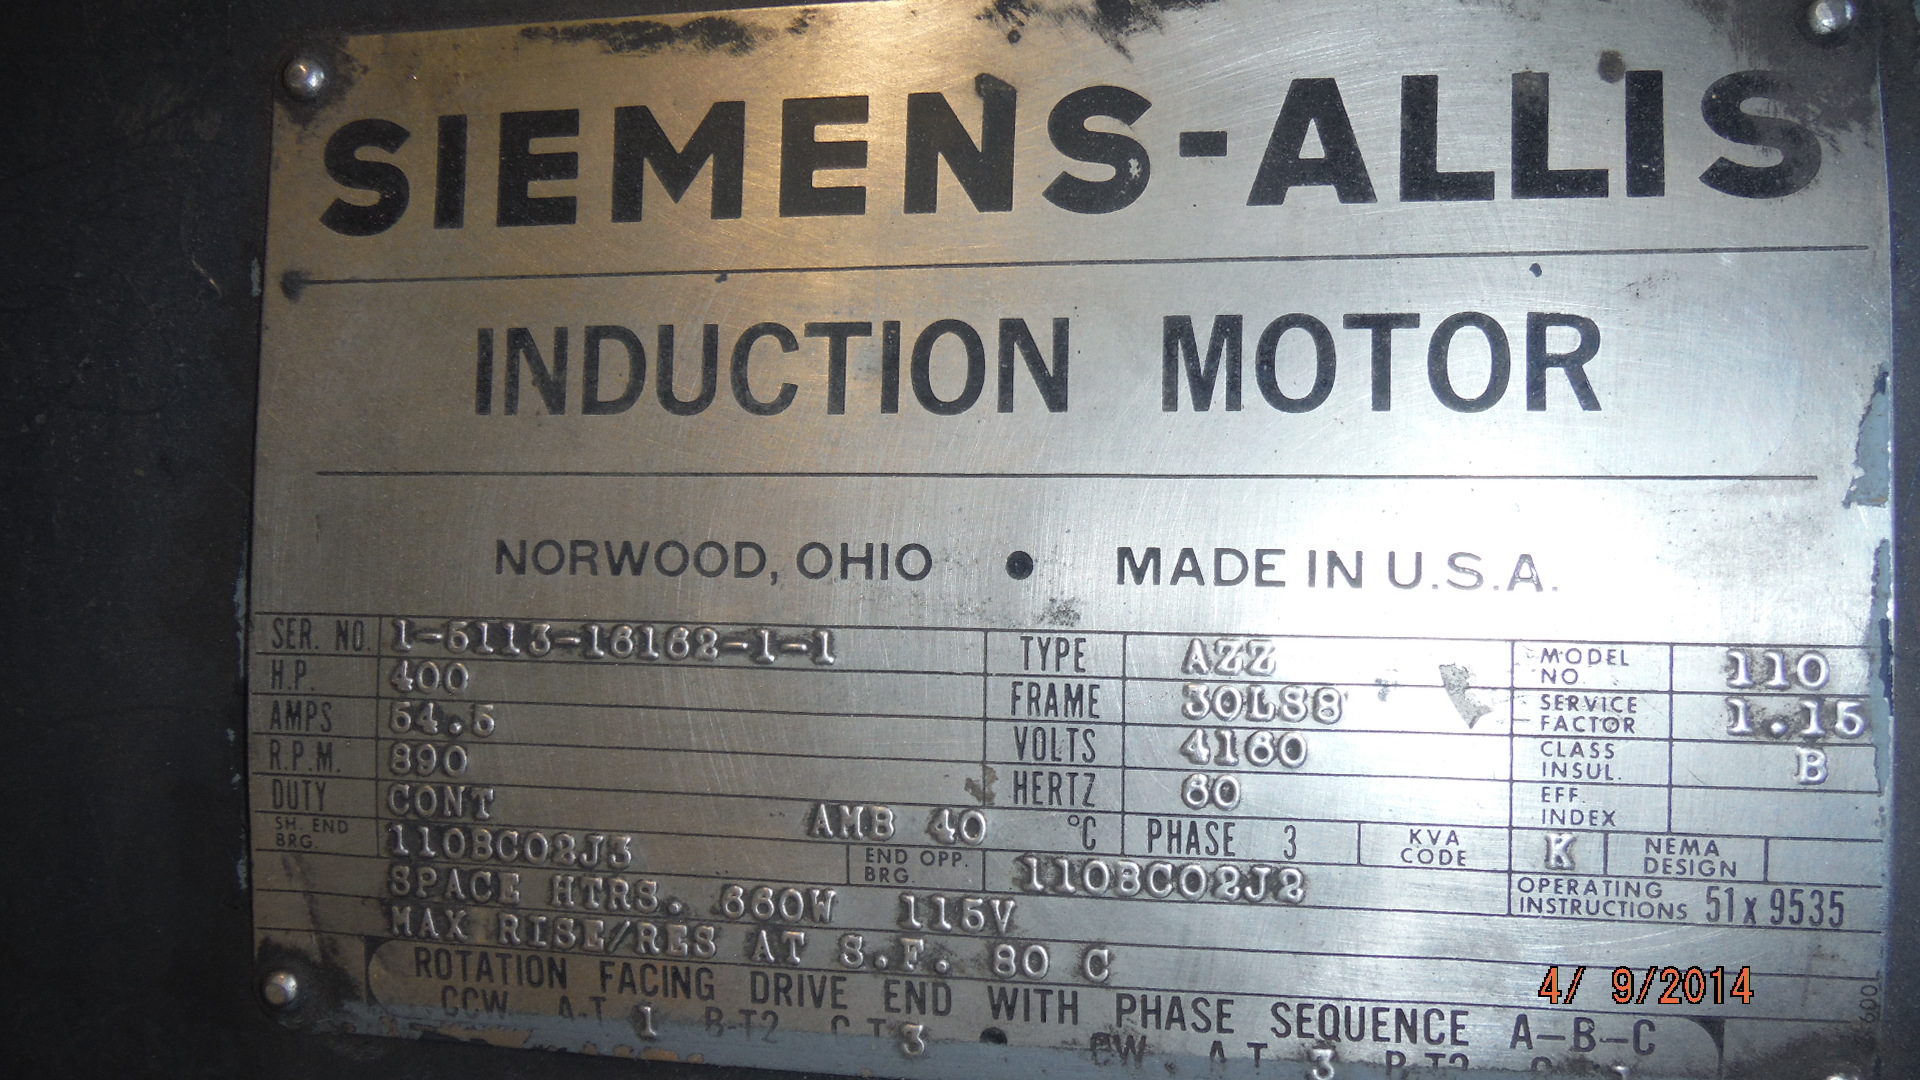 Siemens-Allis 400 HP 900 RPM 30LS8 Squirrel Cage Motors 70715